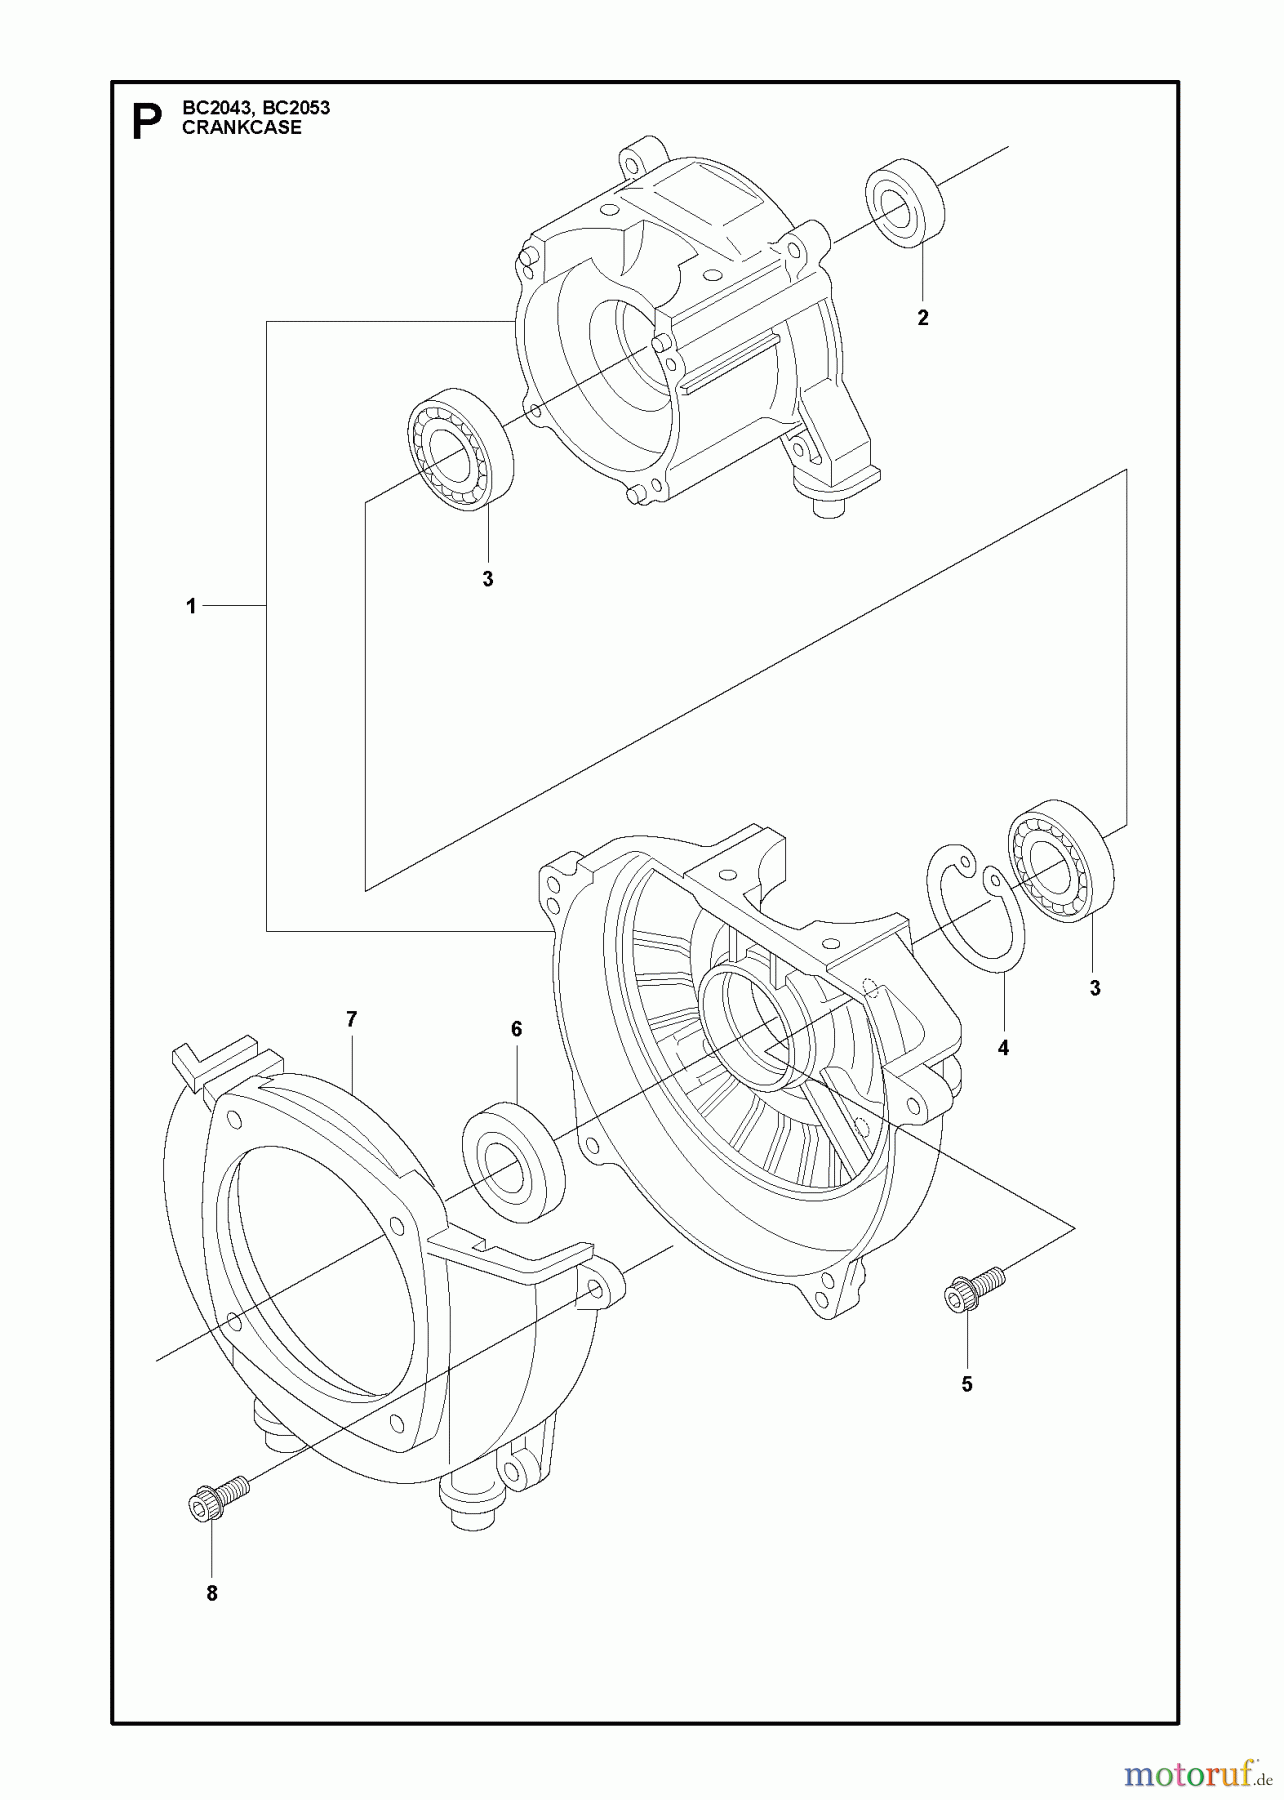  Jonsered Motorsensen, Trimmer BC2043 - Jonsered Brushcutter (2010-01) CRANKCASE